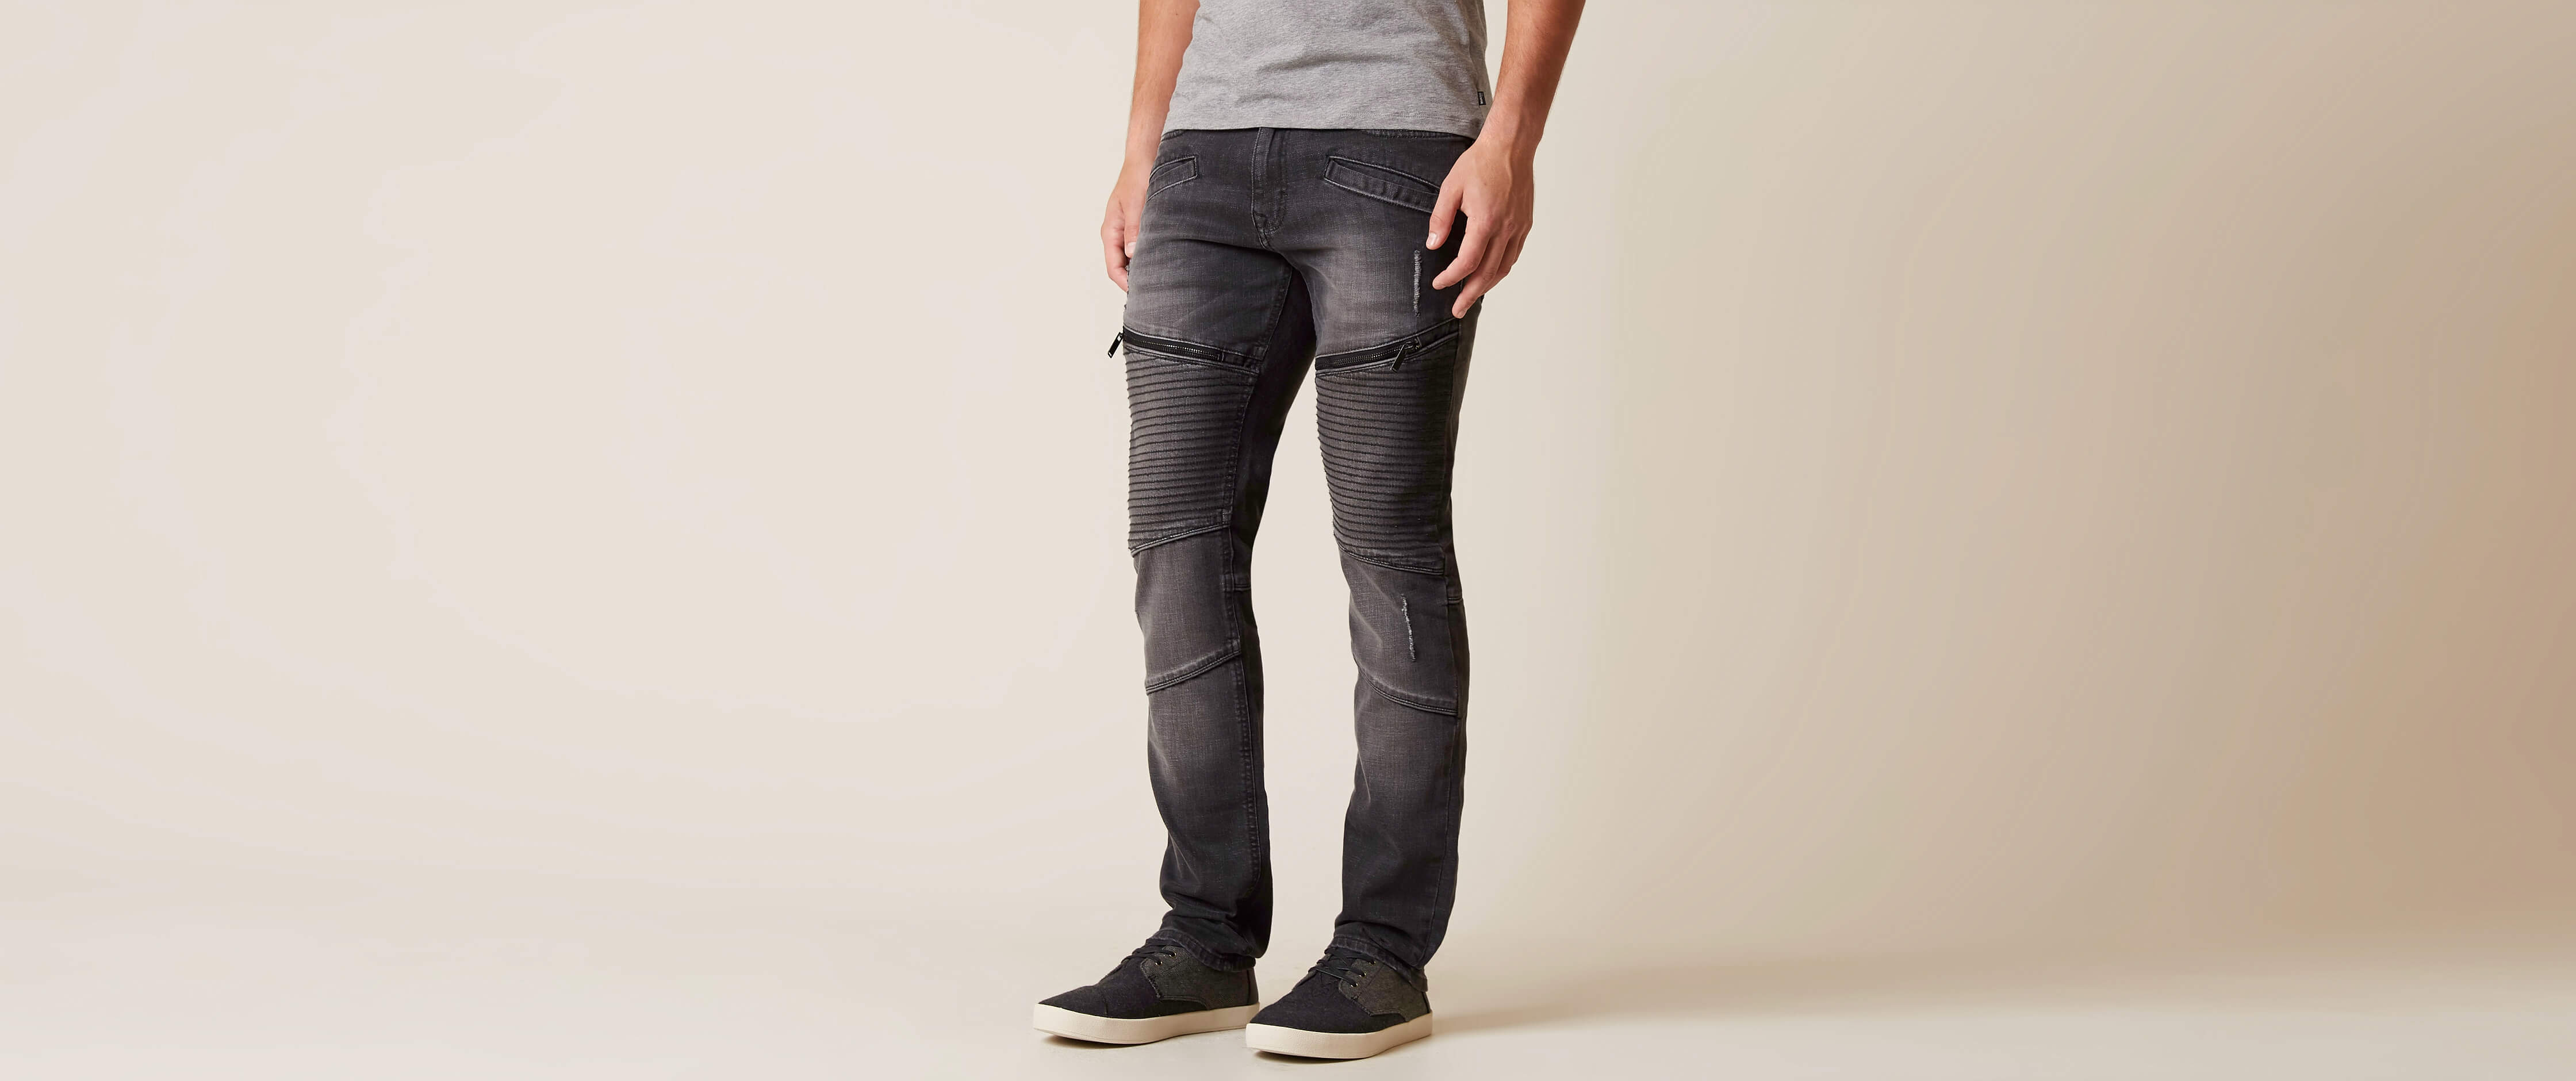 calvin klein men's jeans grey